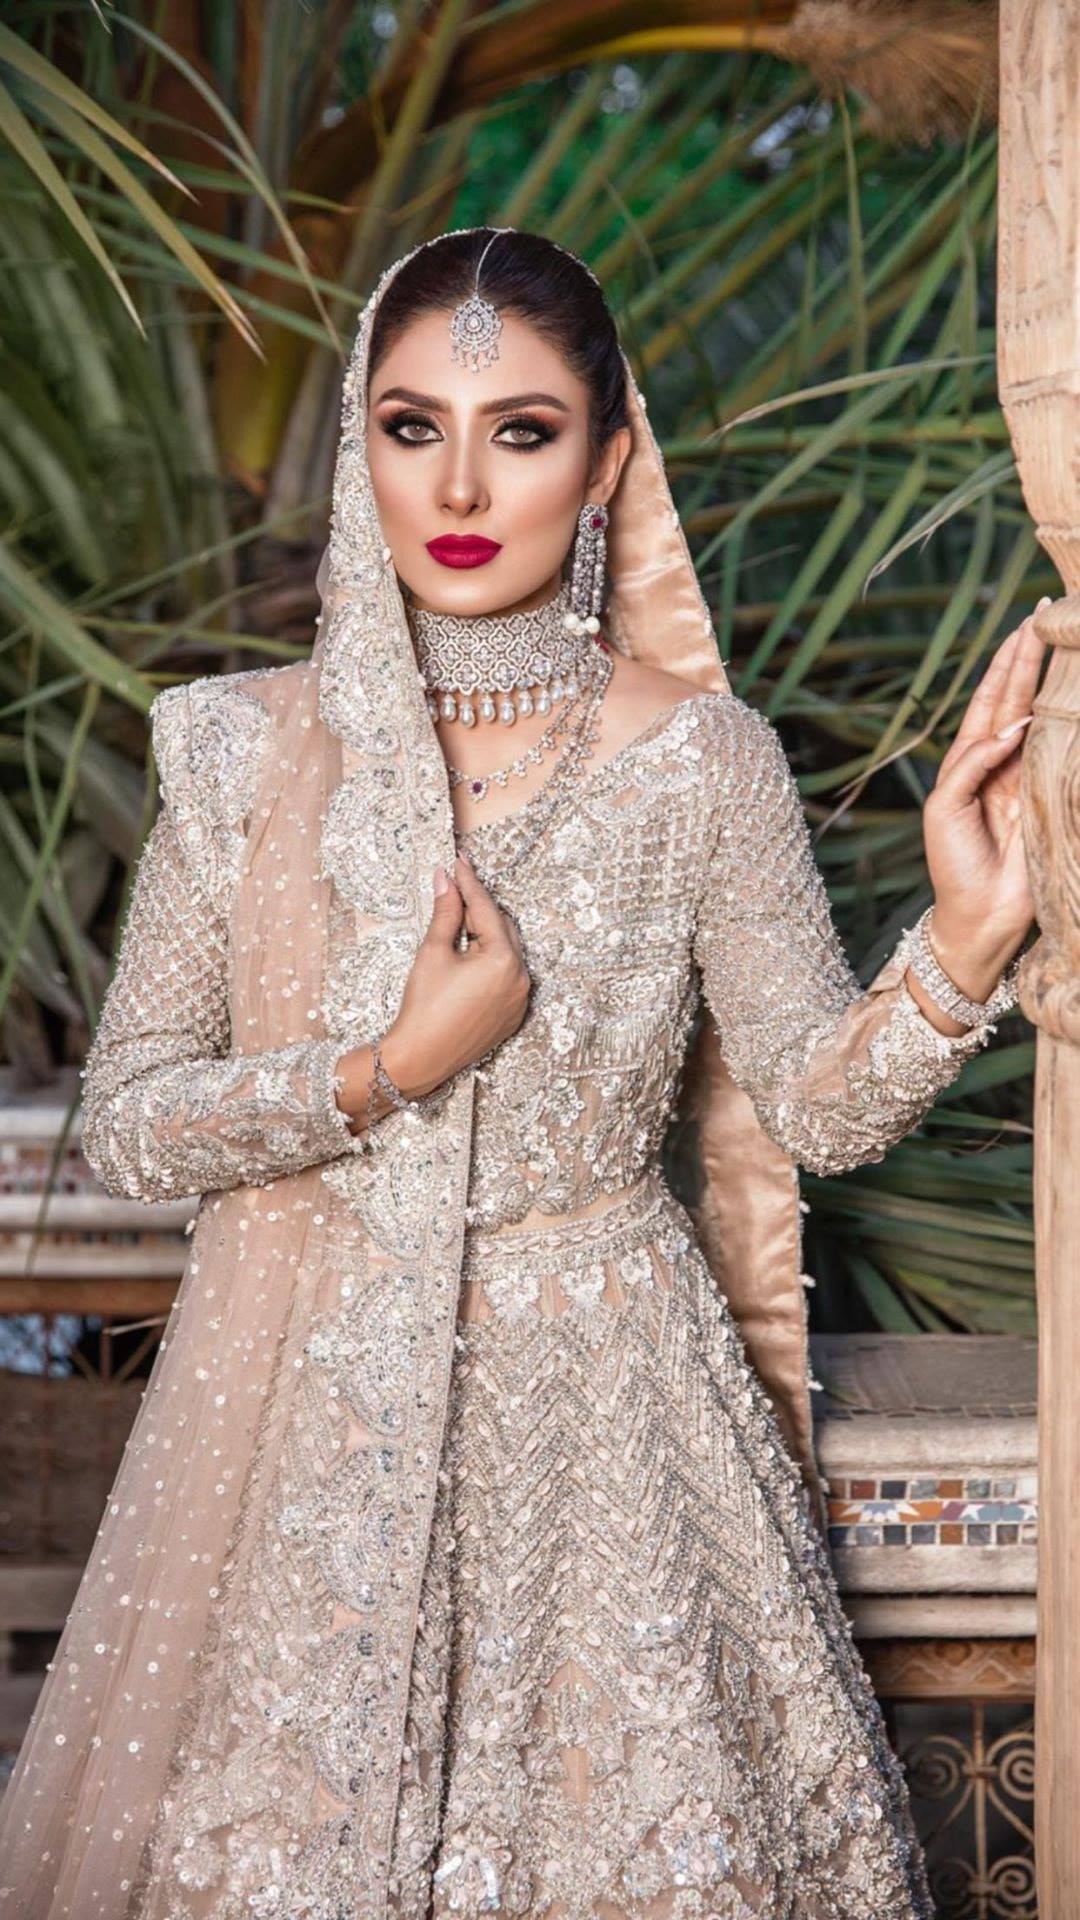 Ayeza Khan looks stunning in Latest Bridal Shoot